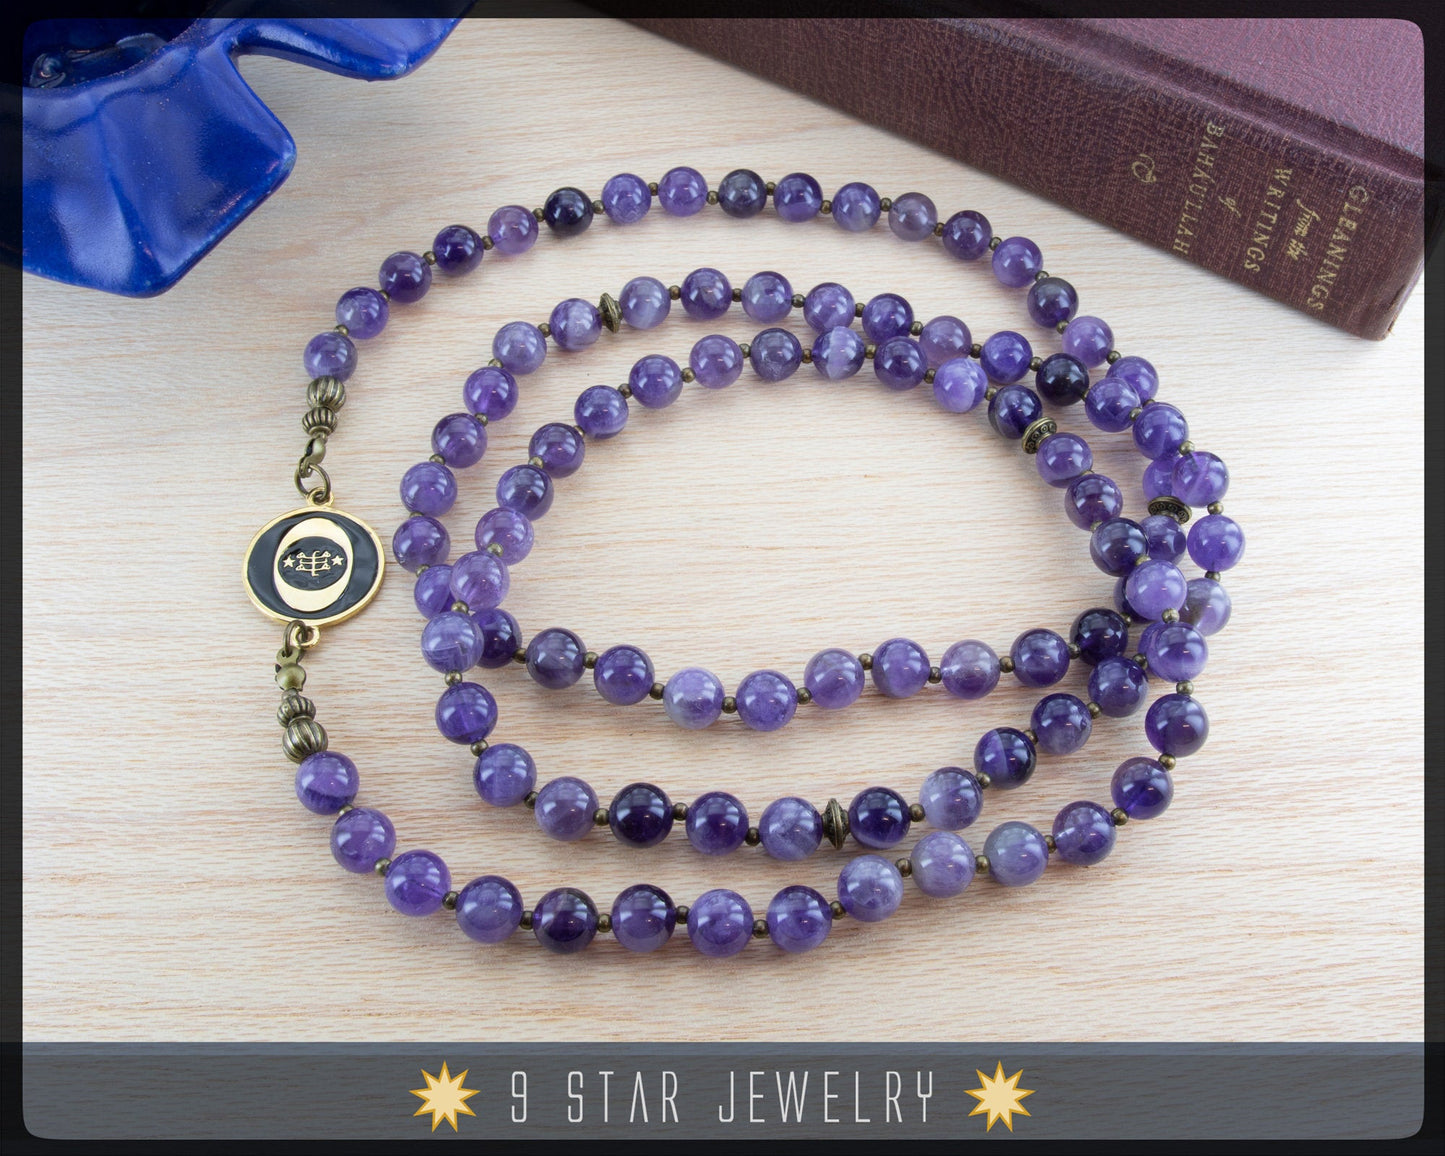 Amethyst Baha'i Prayer Beads w/bahai ringstone symbol "Forever Grateful"